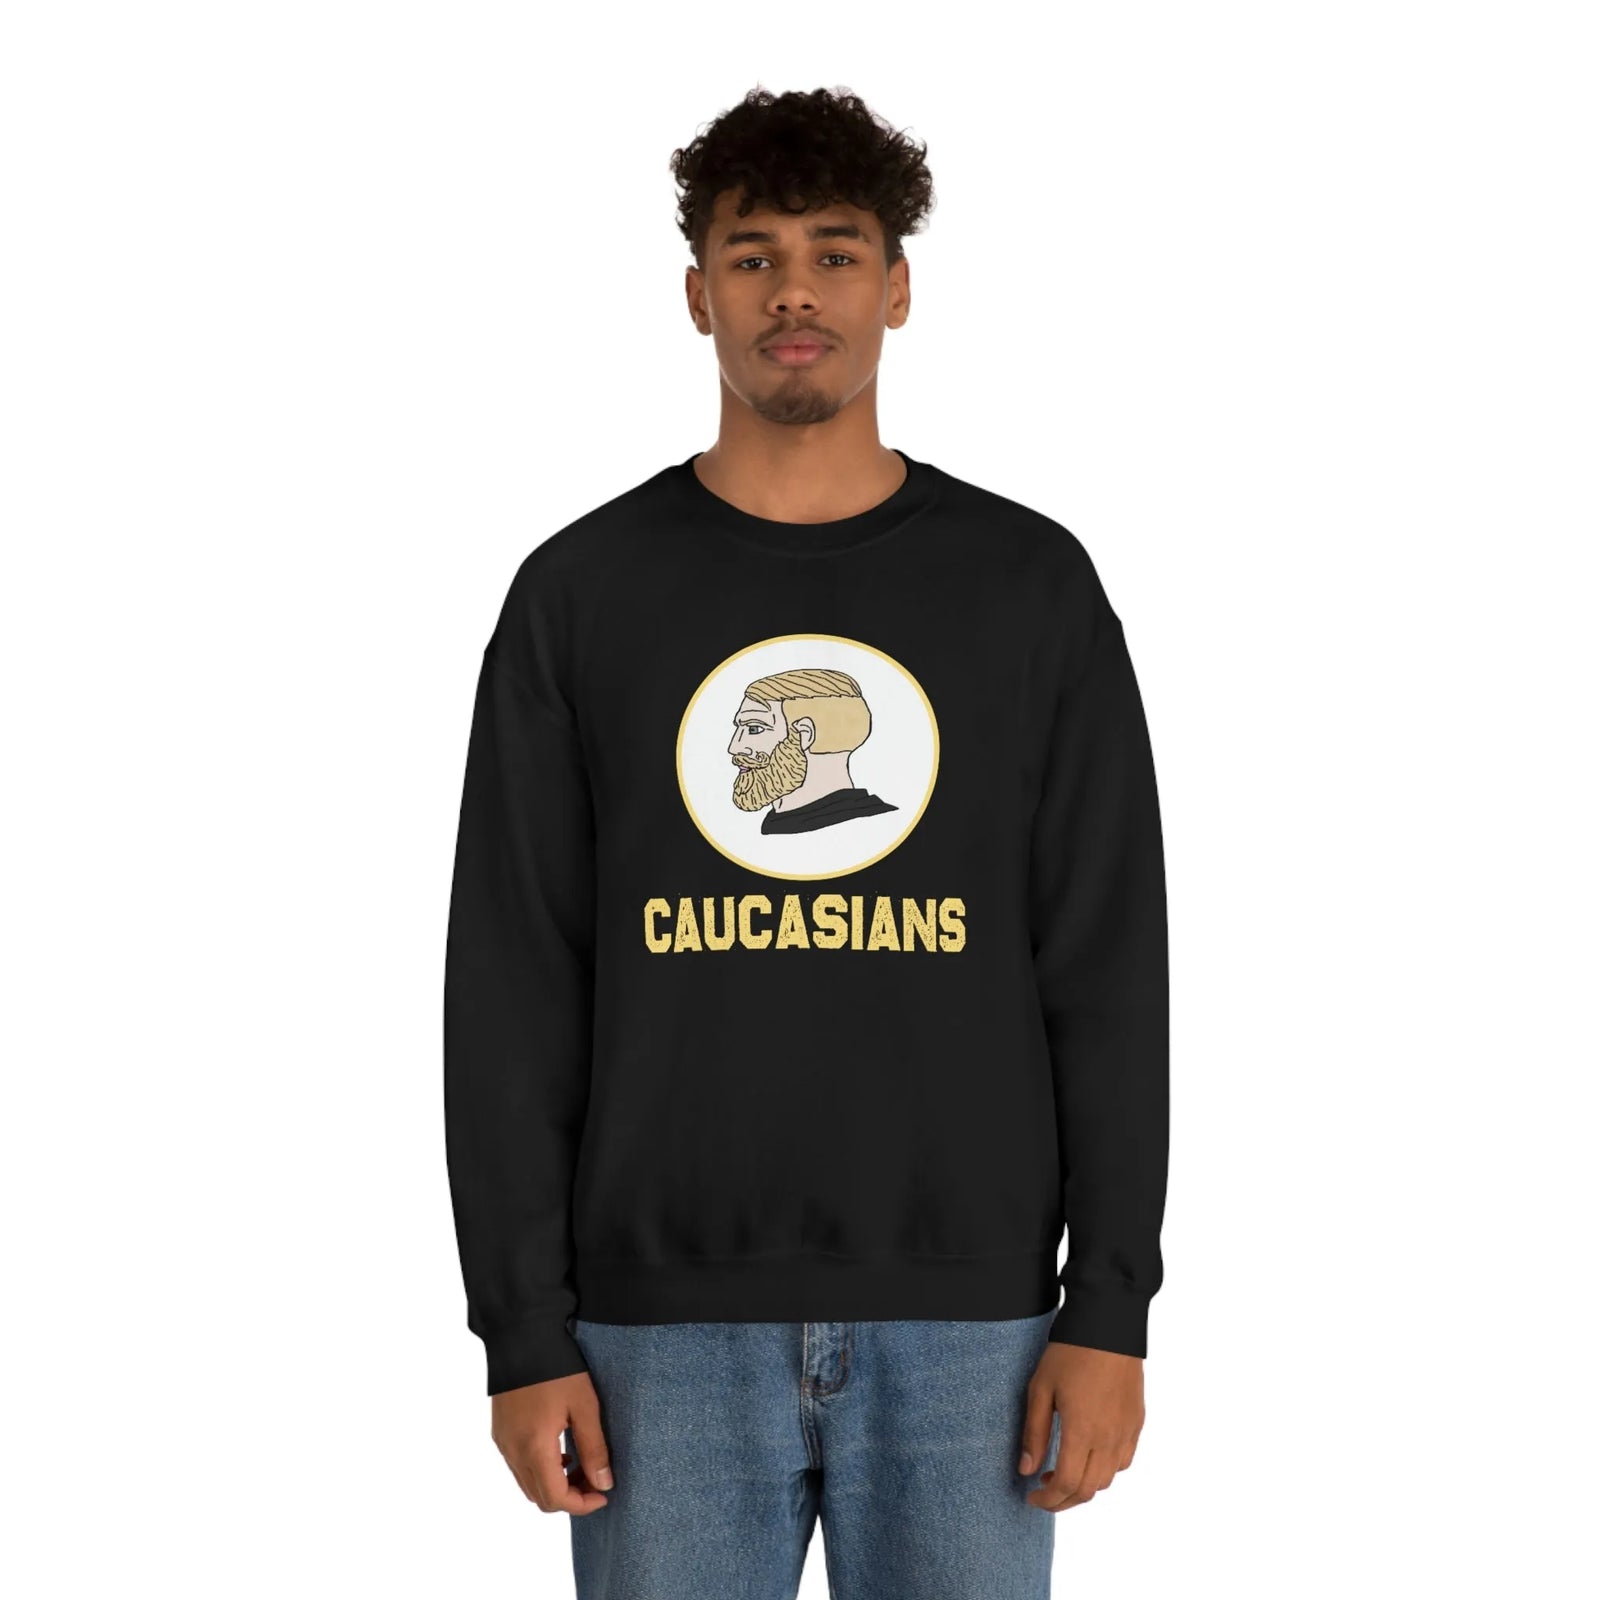 Caucasians Crewneck Sweatshirt